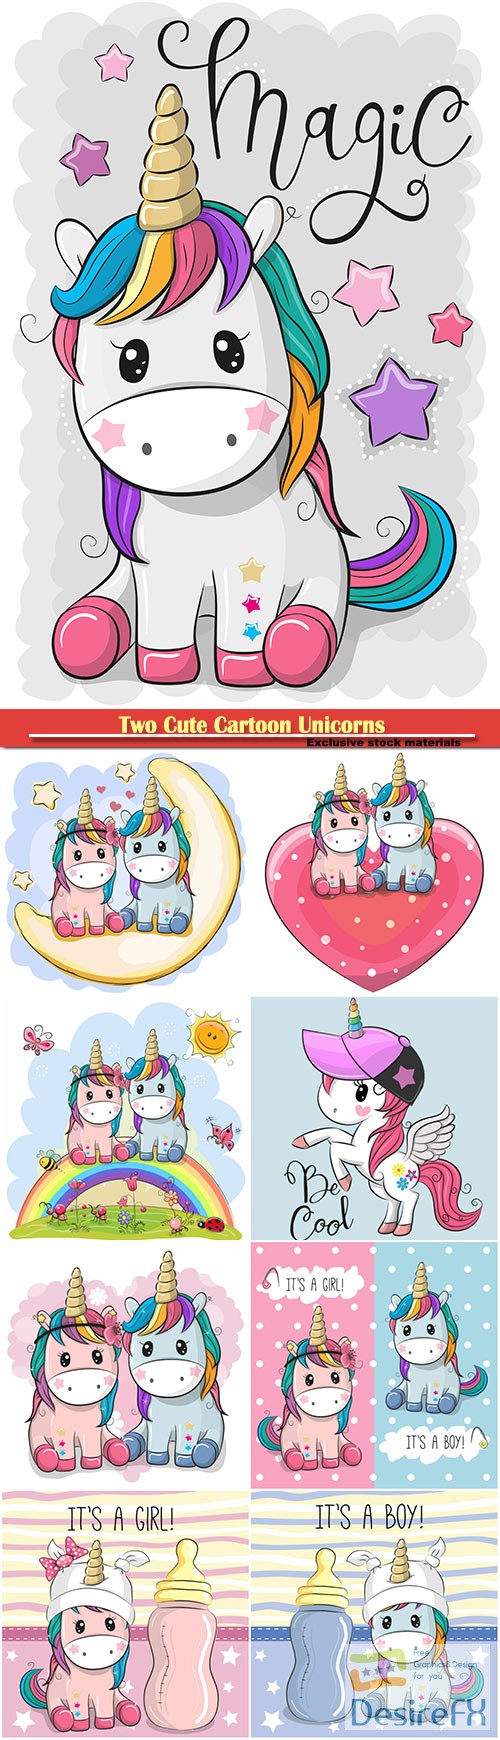 Two Cute Cartoon Unicorns on a heart background